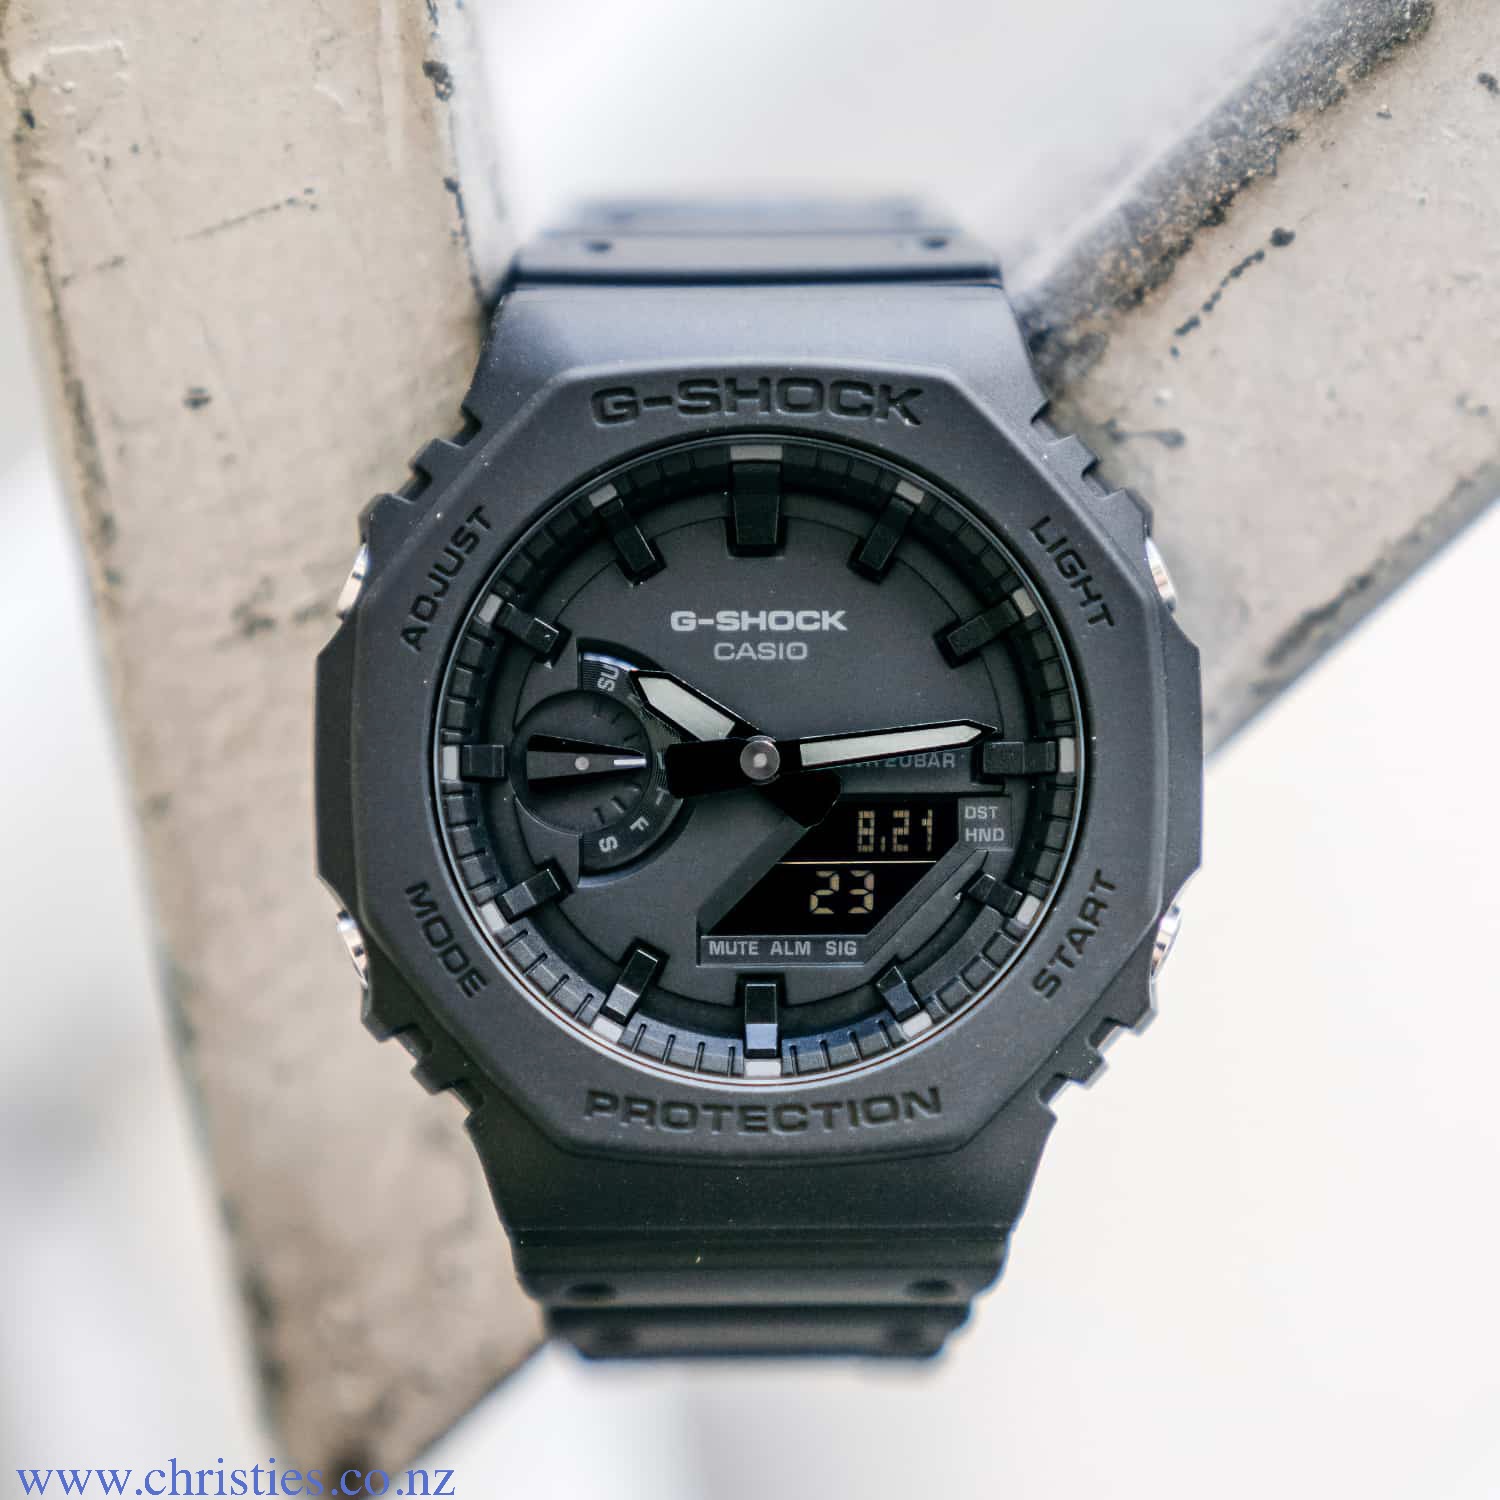 GA2100-1A1 G-SHOCK Carbon Core Watch.casio watches nz sale $279.00